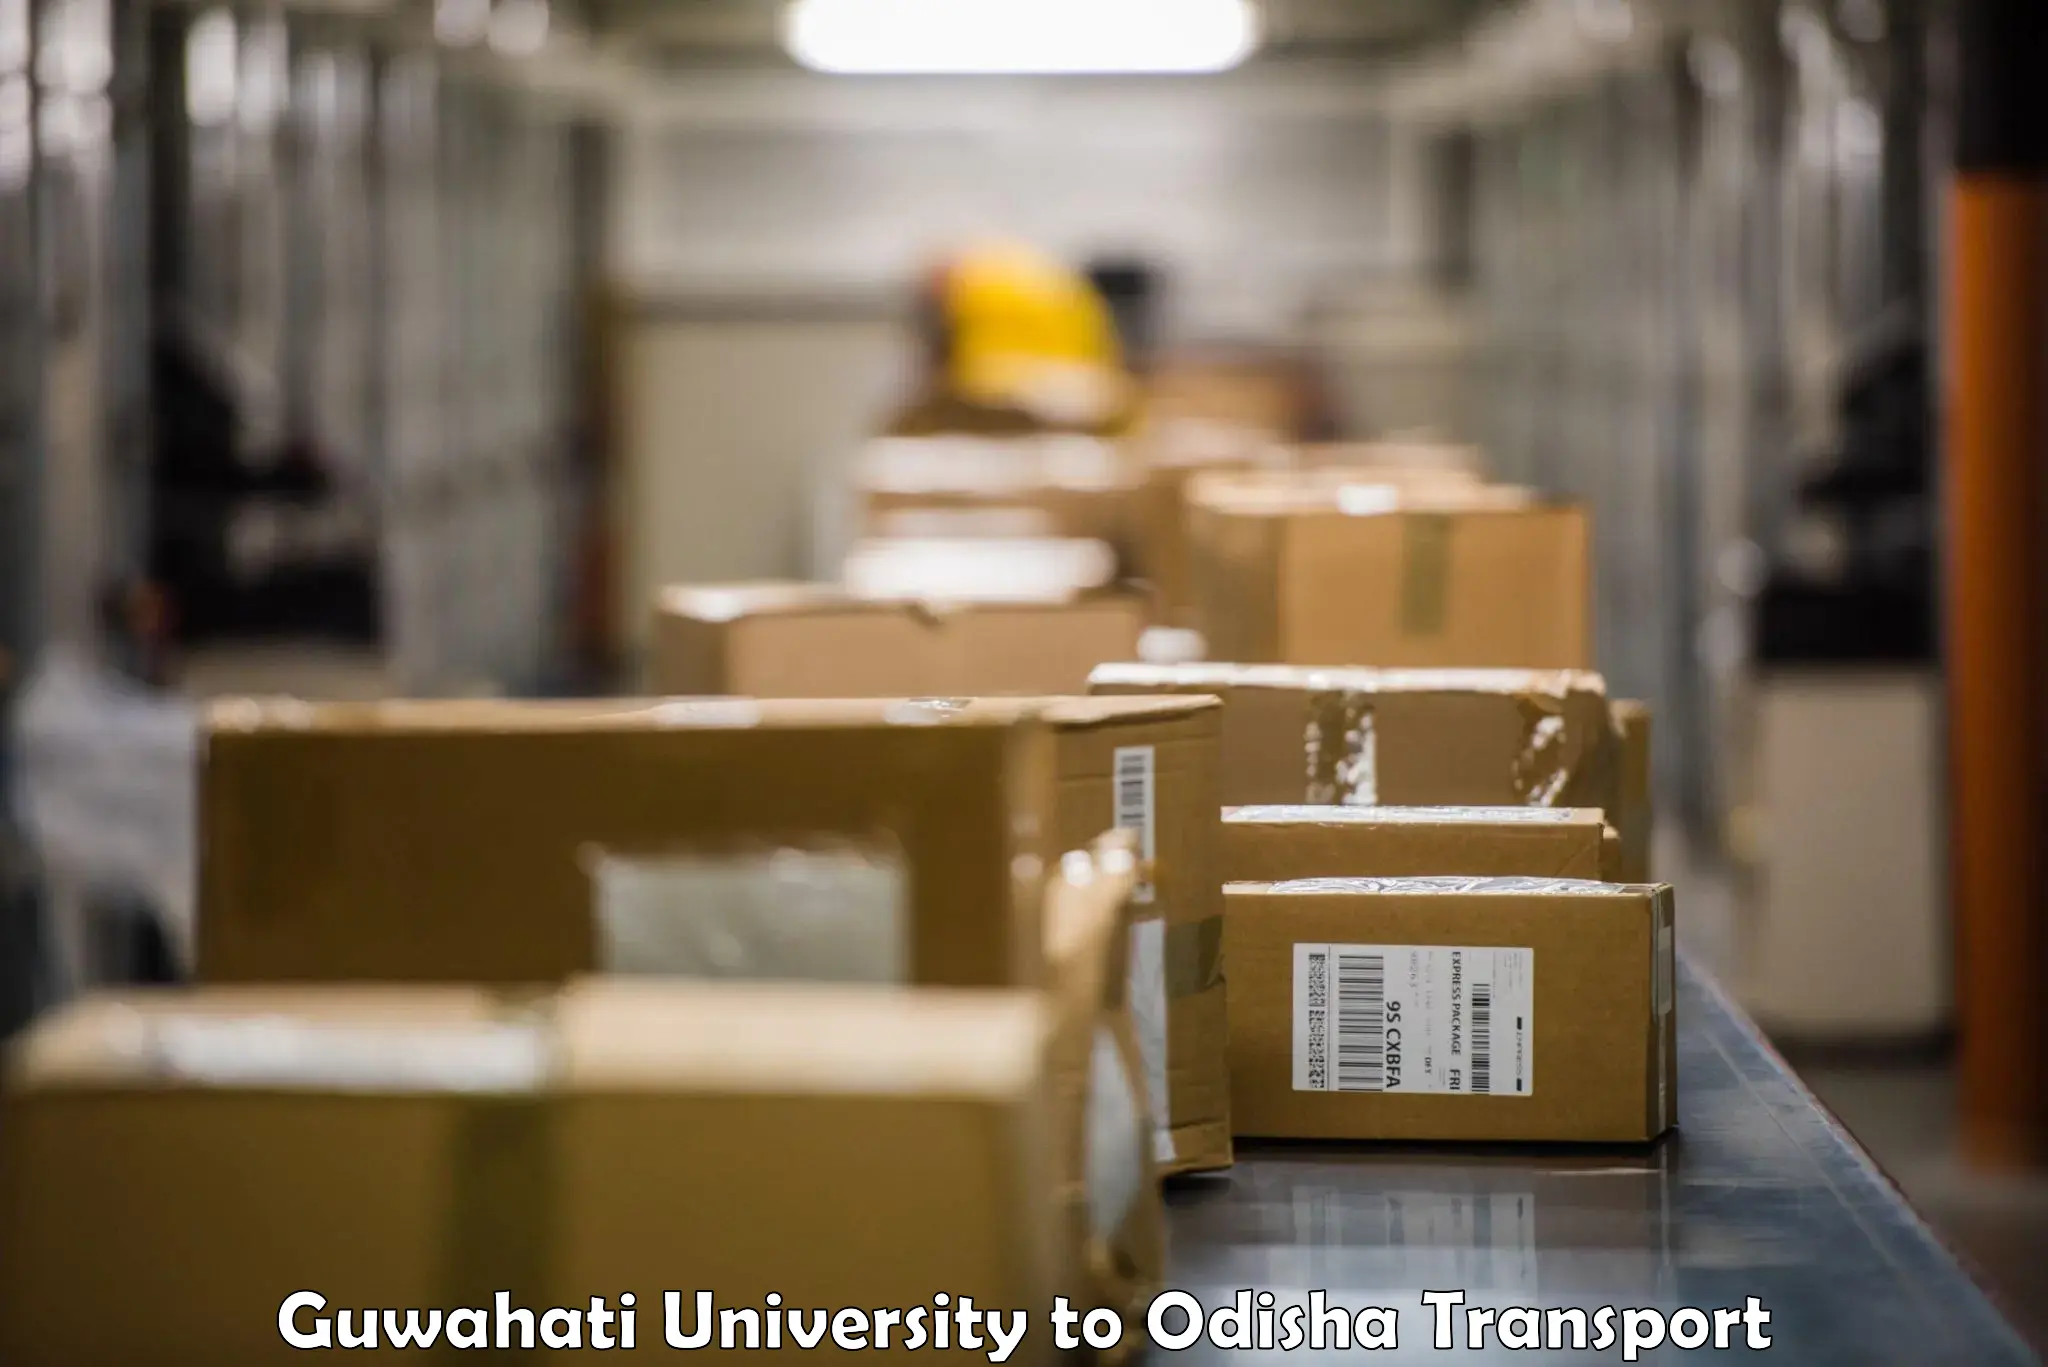 Daily parcel service transport Guwahati University to Odisha